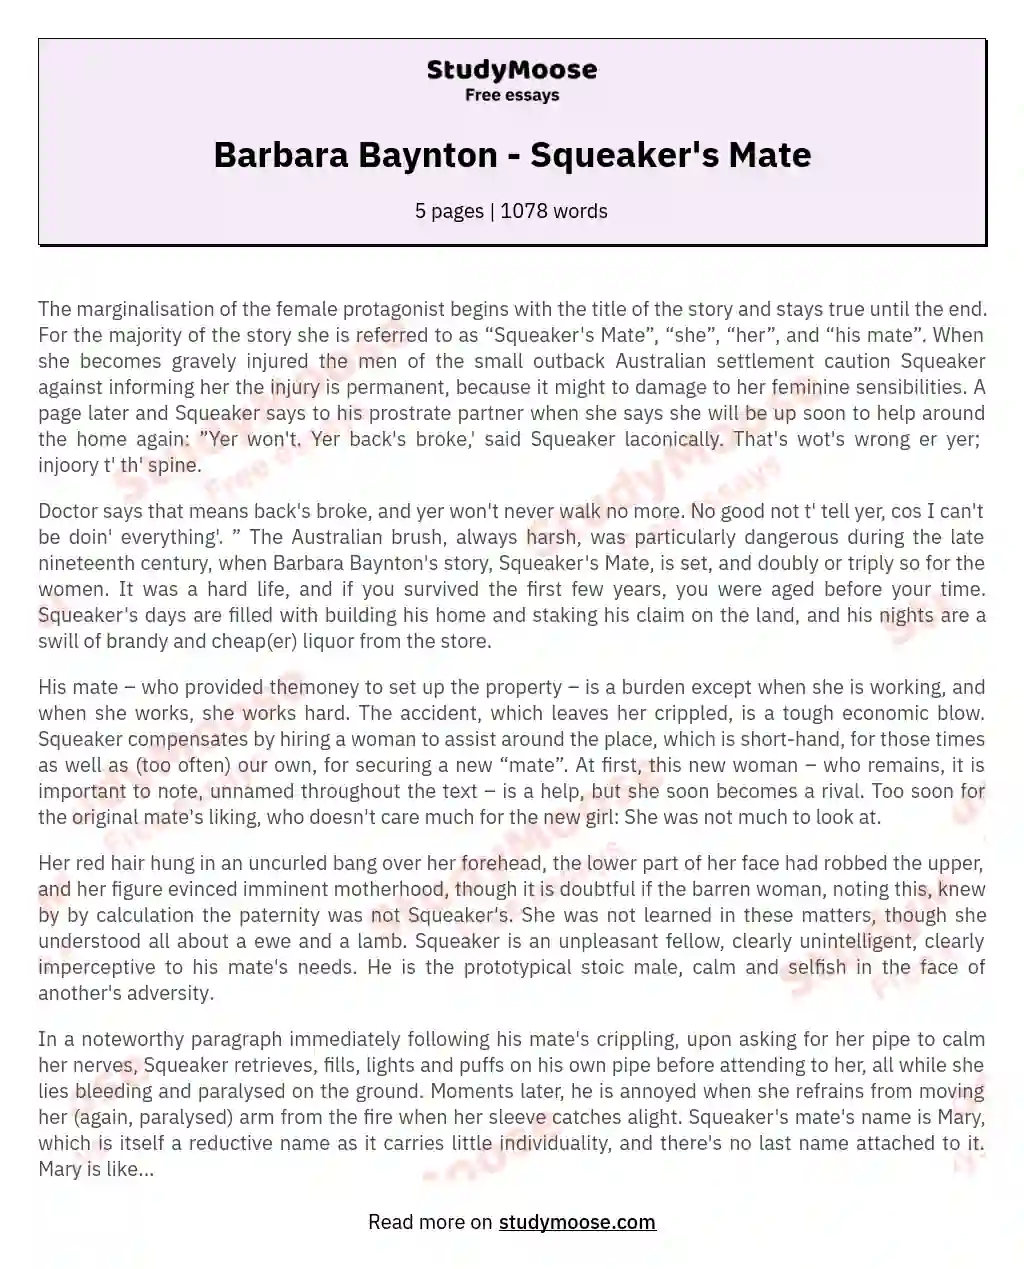 Barbara Baynton - Squeaker's Mate